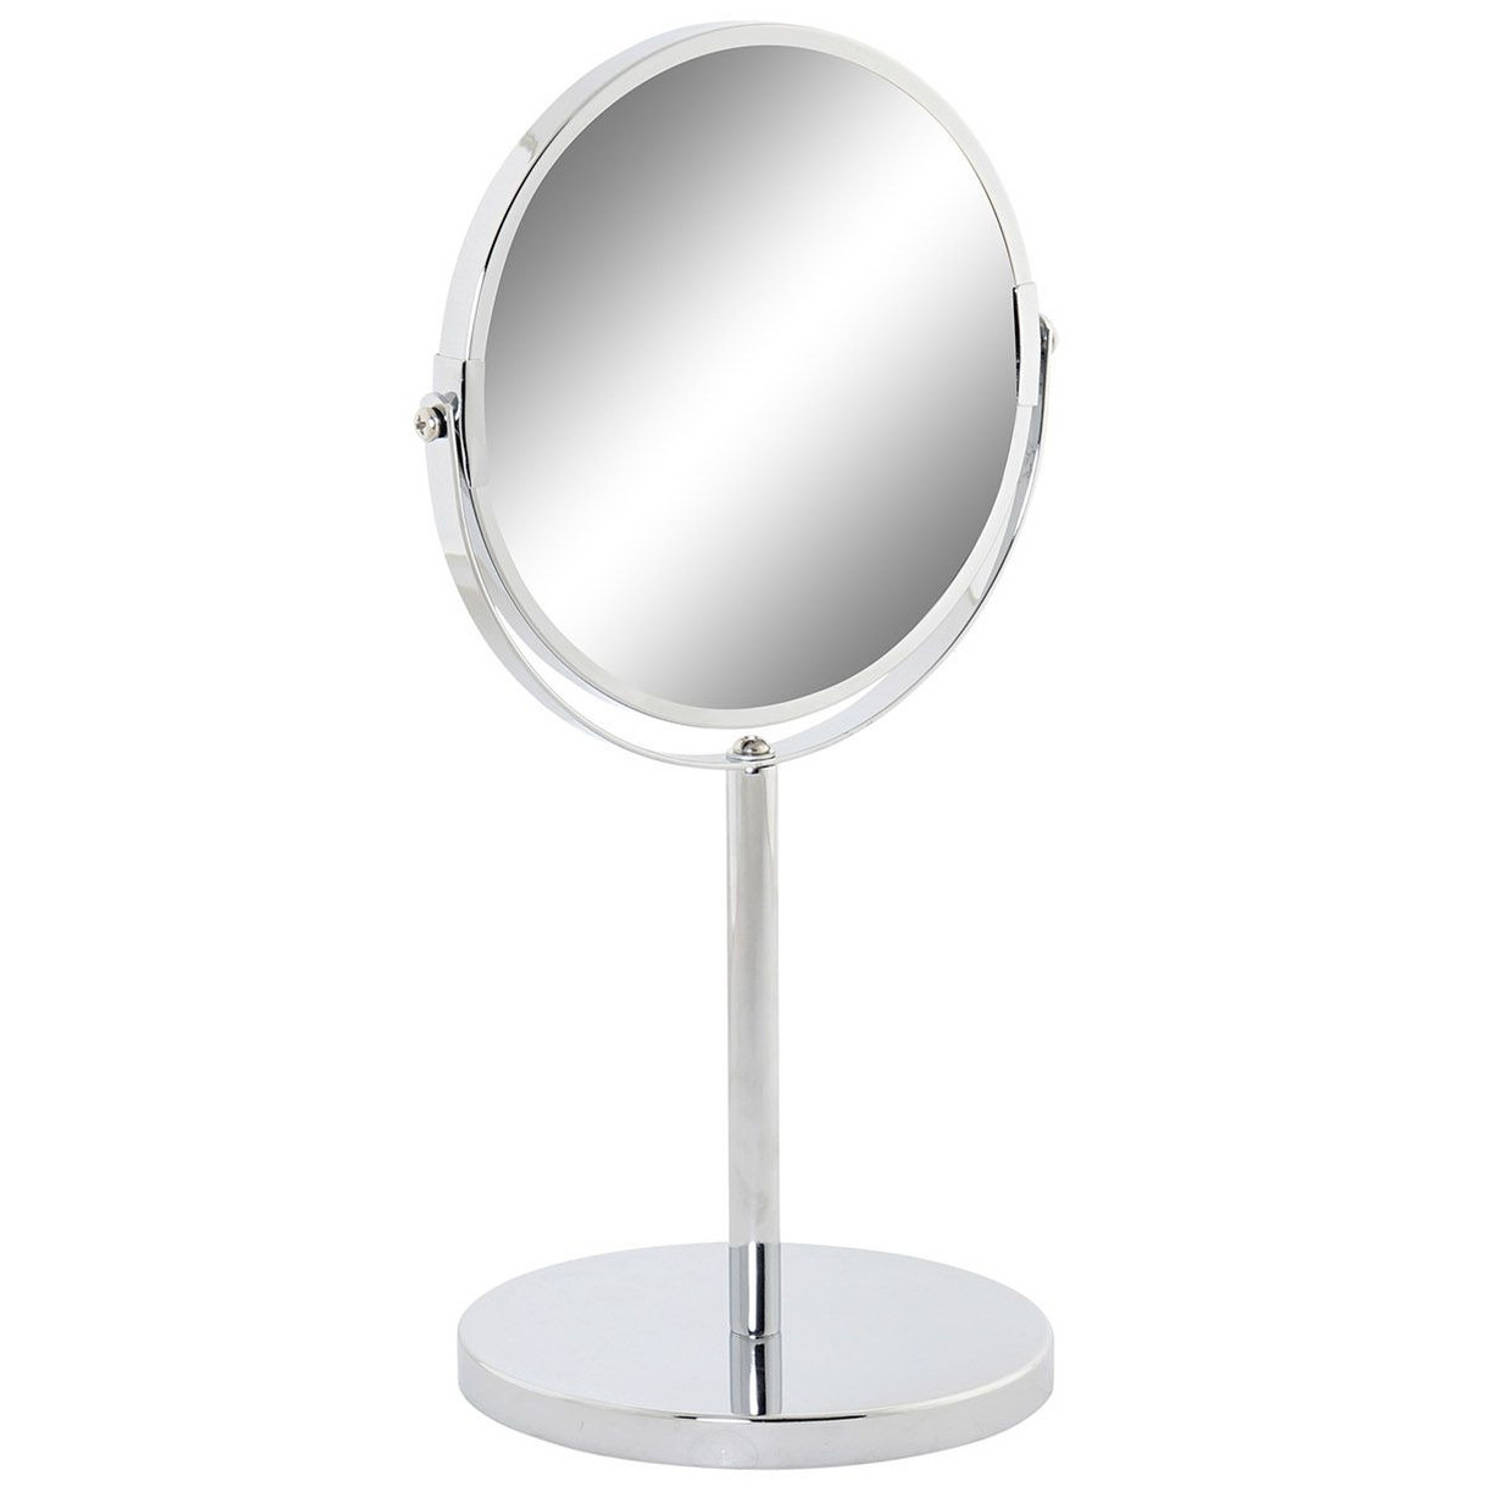 Badkamerspiegel / make-up spiegel rond dubbelzijdig metaal zilver D19 x H35 cm - Make-up spiegeltjes